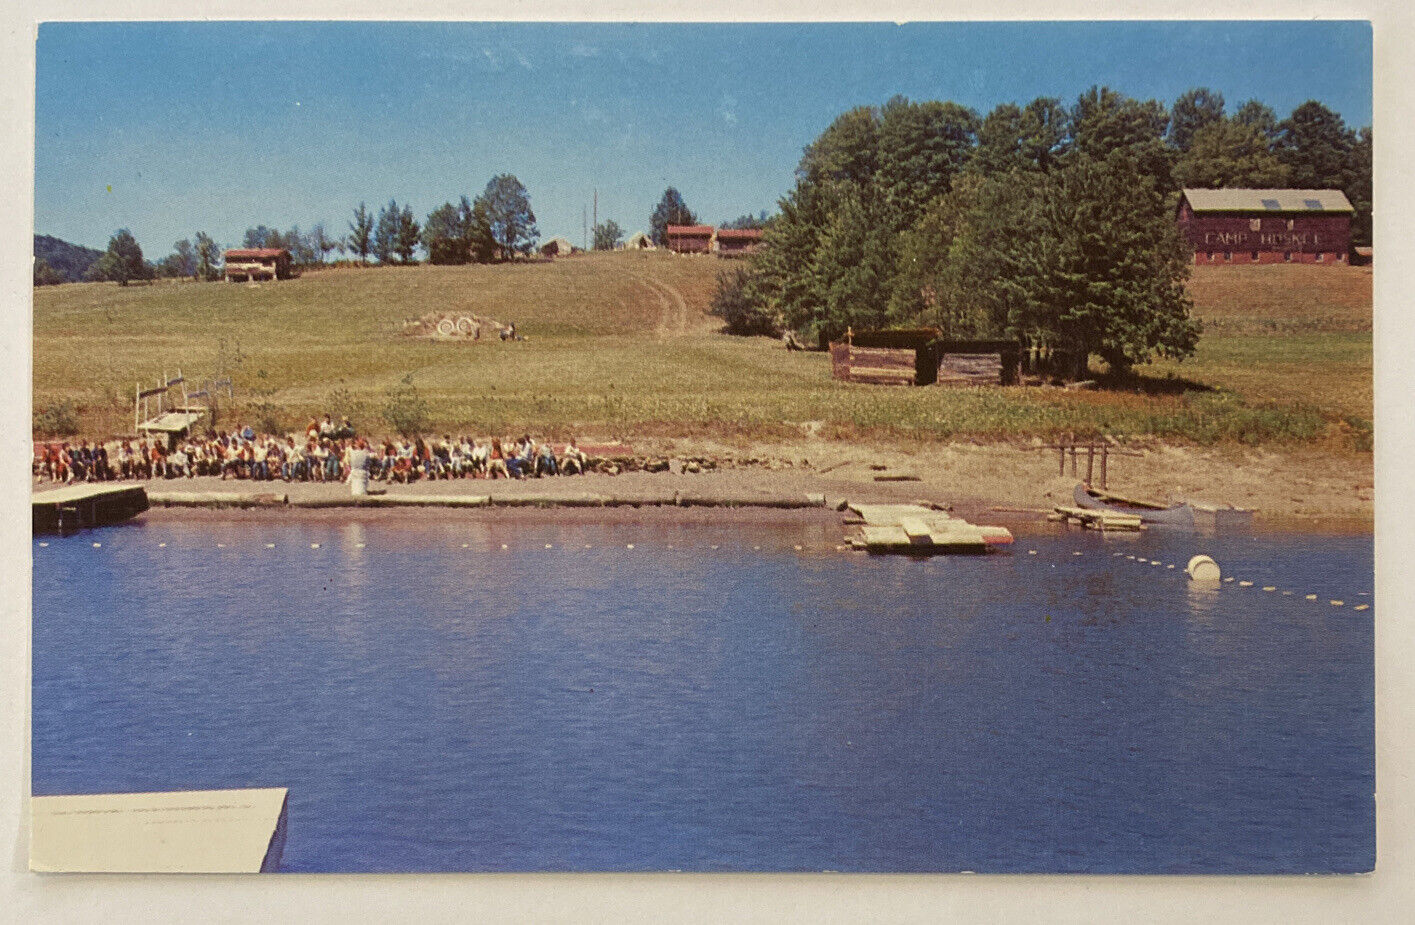 Vintage Postcard, Camp Huskee, Binghamton, New York